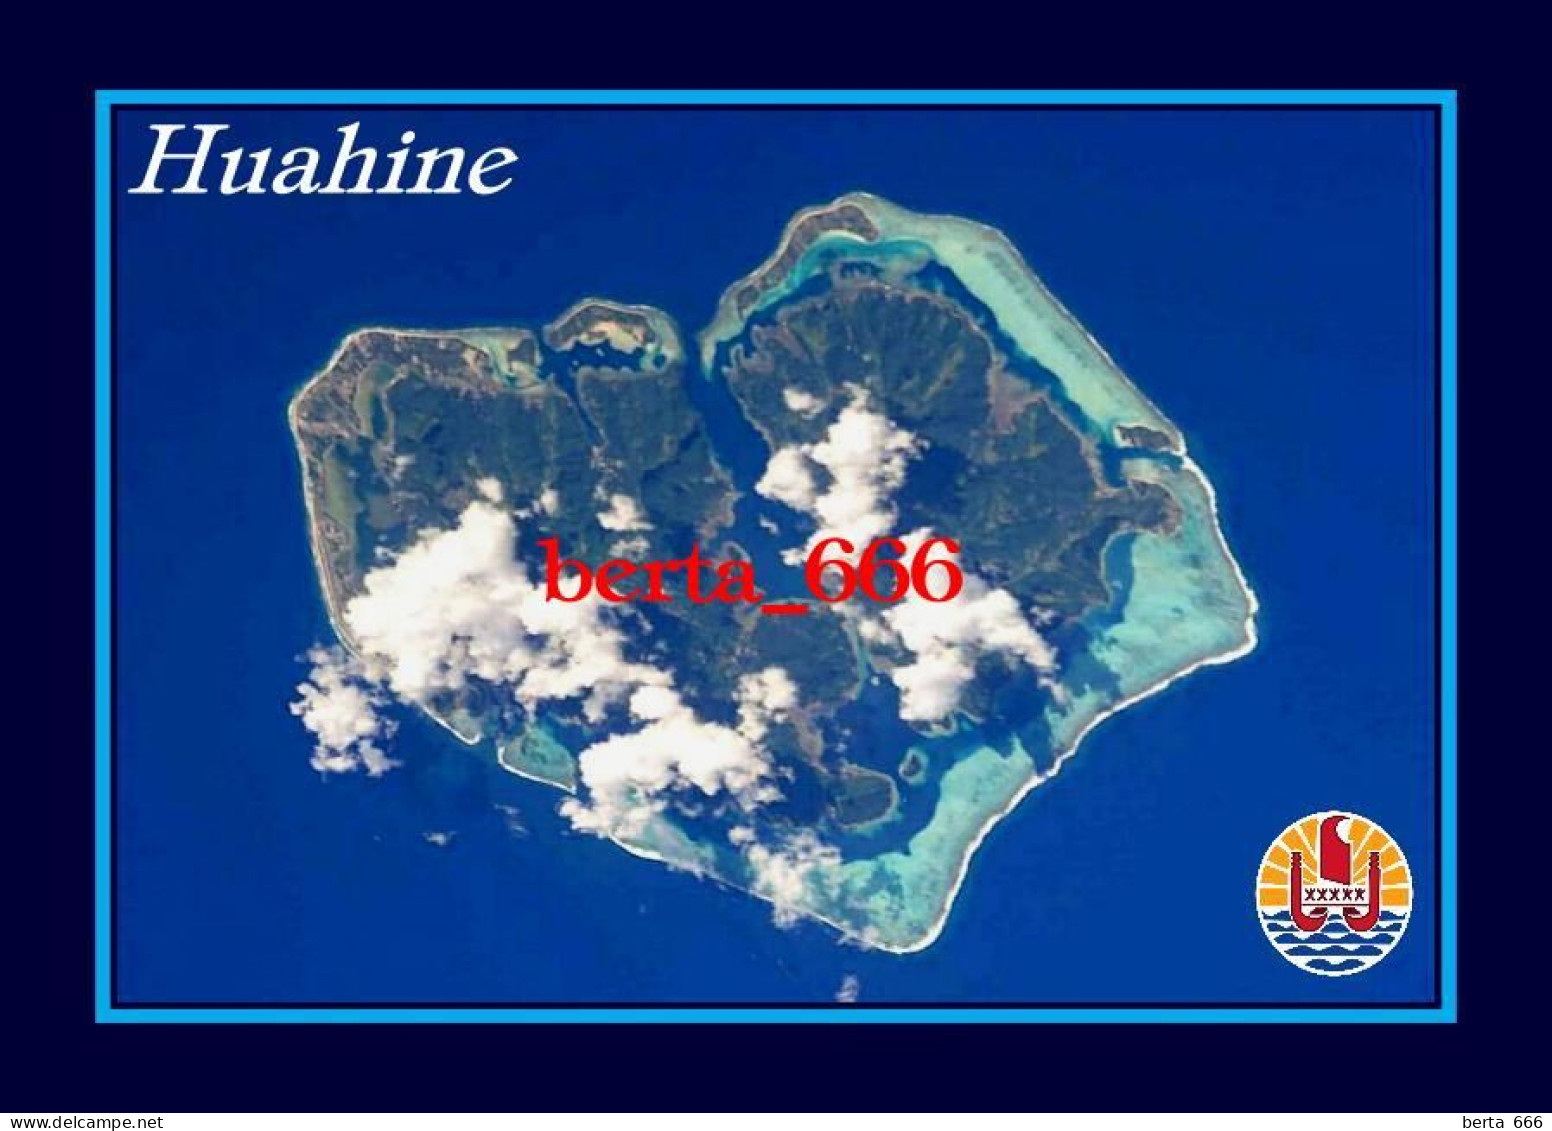 French Polynesia Huahine Aerial View New Postcard - Polynésie Française